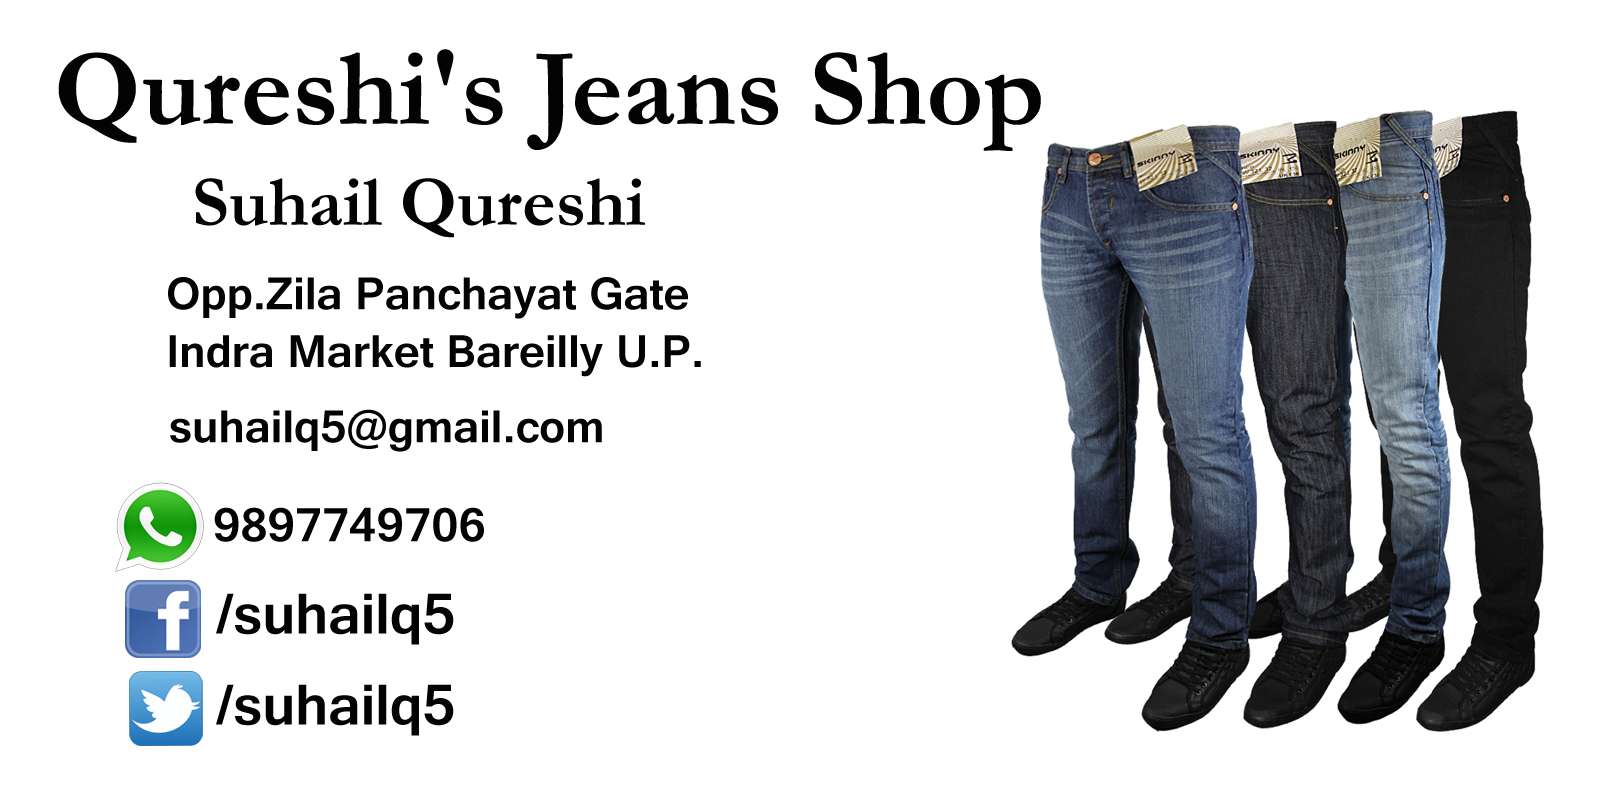 Qureshi Jeans Shop